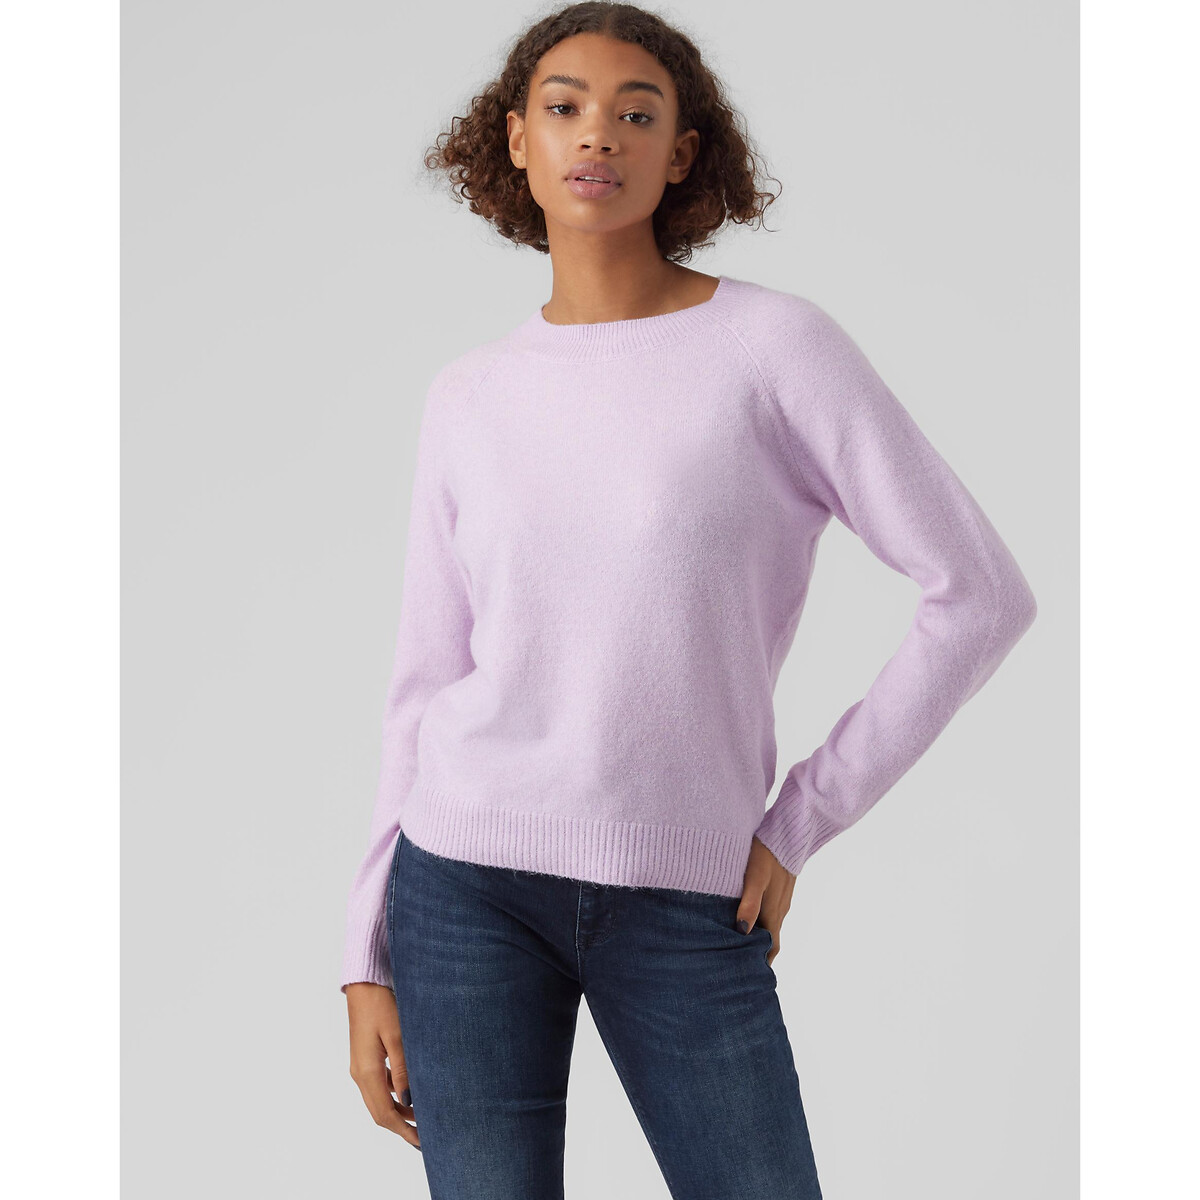 Пуловер Из пышного трикотажа S розовый